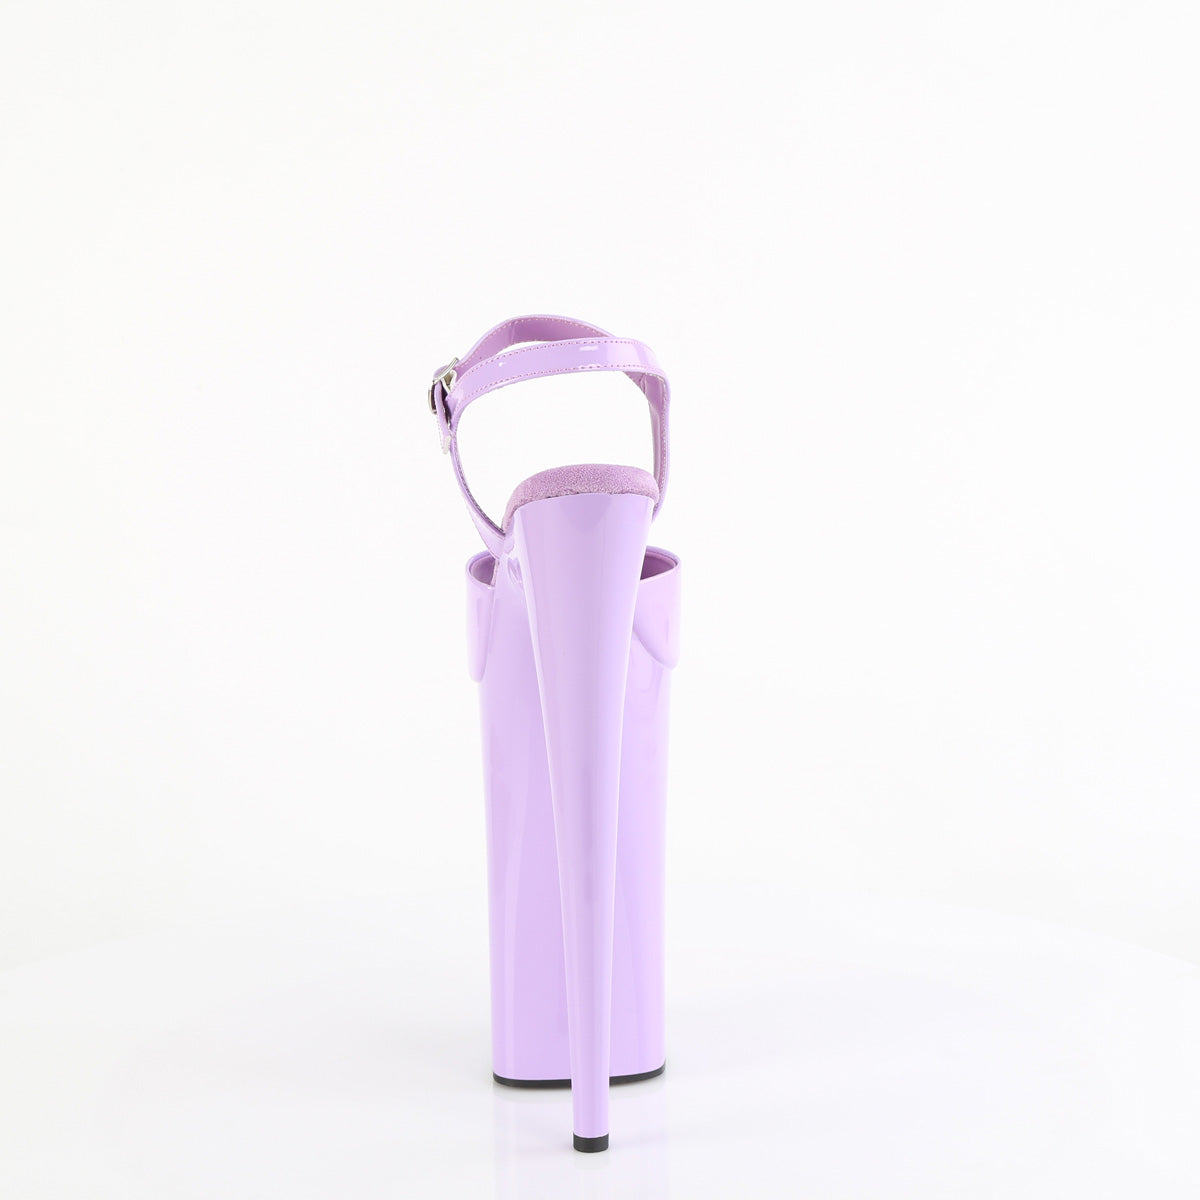 10 Inch Heel BEYOND-009 Lavender Patent